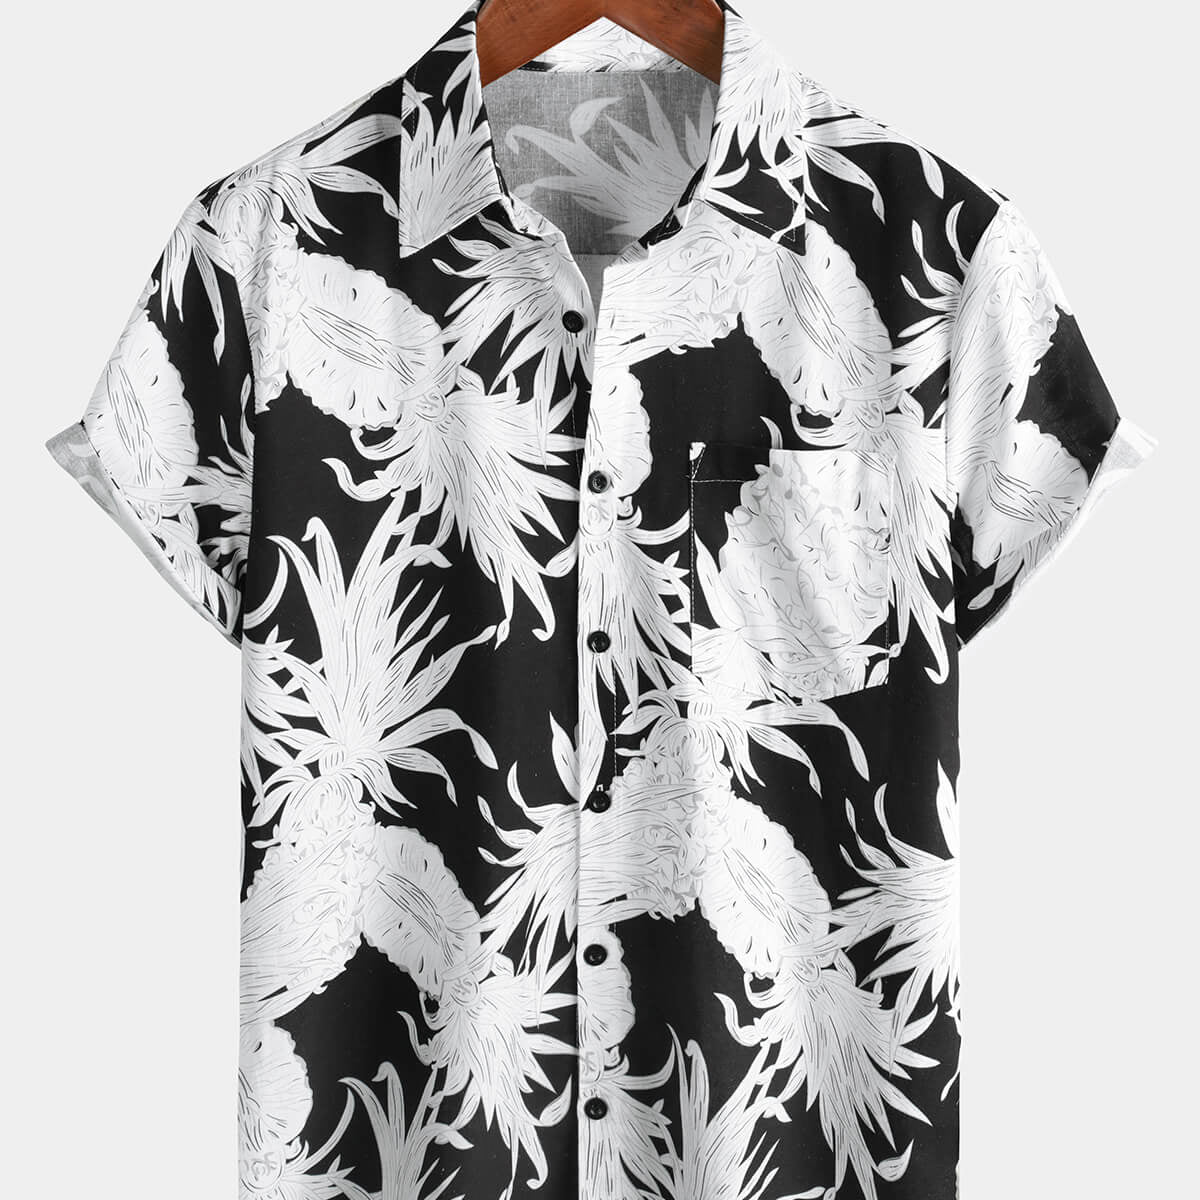 Men's Pineapple Print Cotton Linen Black and White Hawaiian Button Up Short Sleeve Shirt